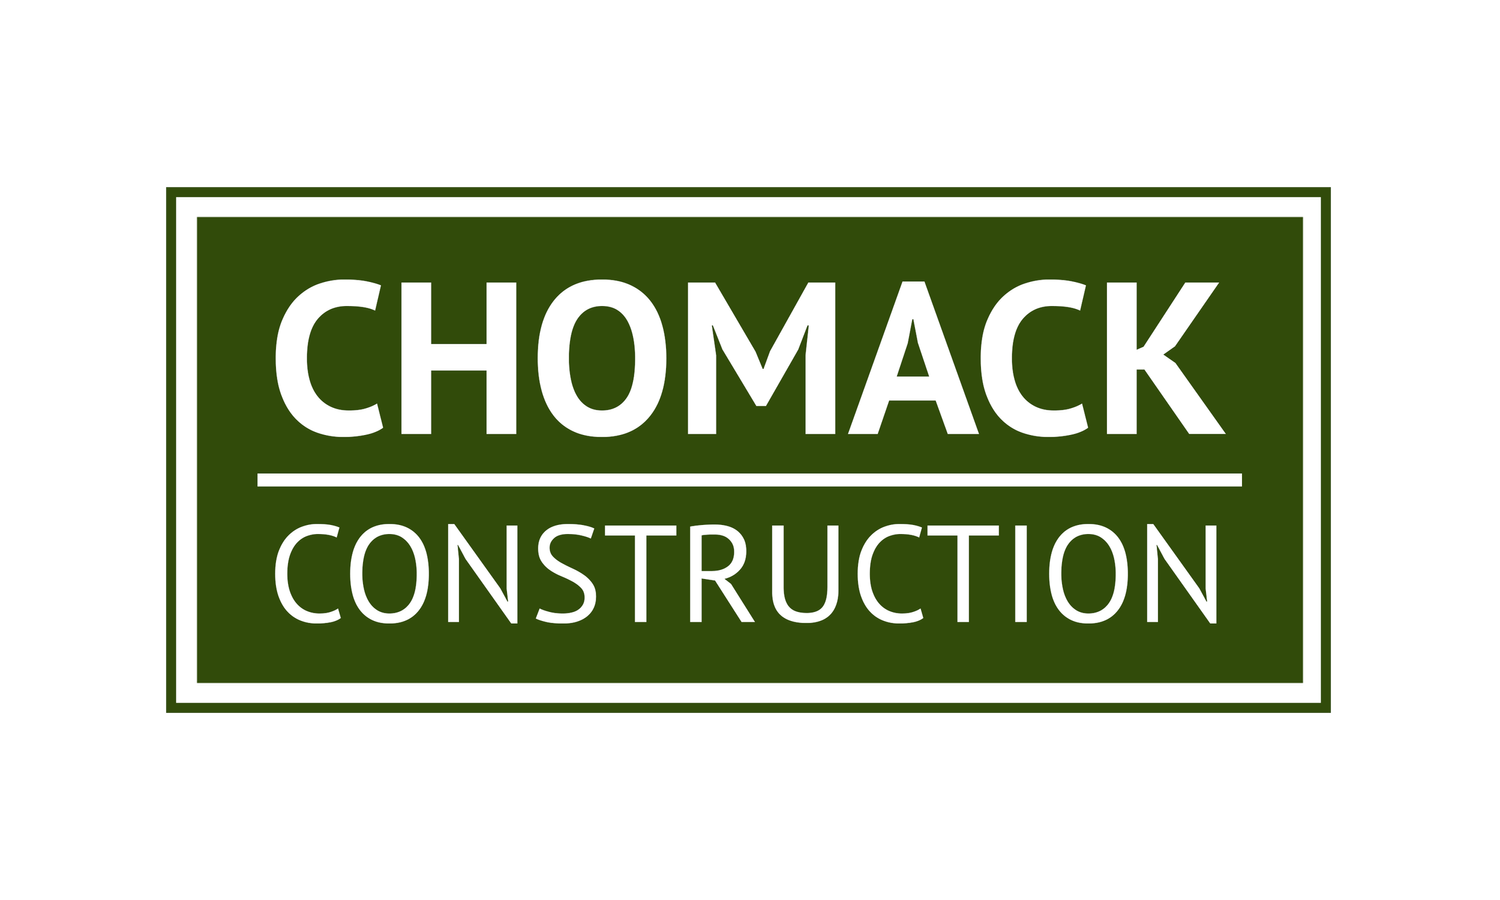 Chomack Construction